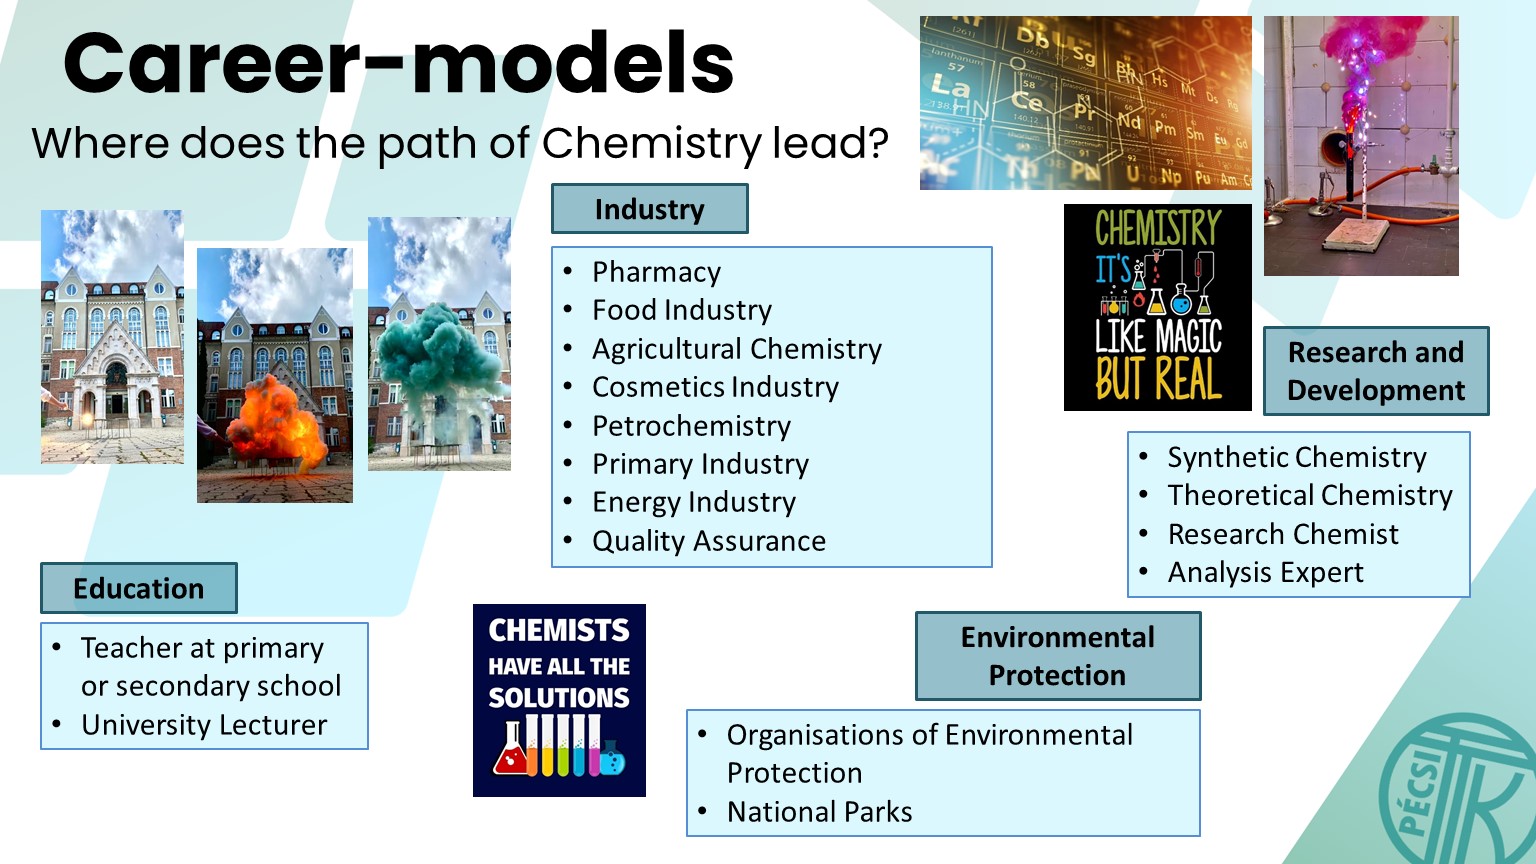 Career-models for Chemistry applicants